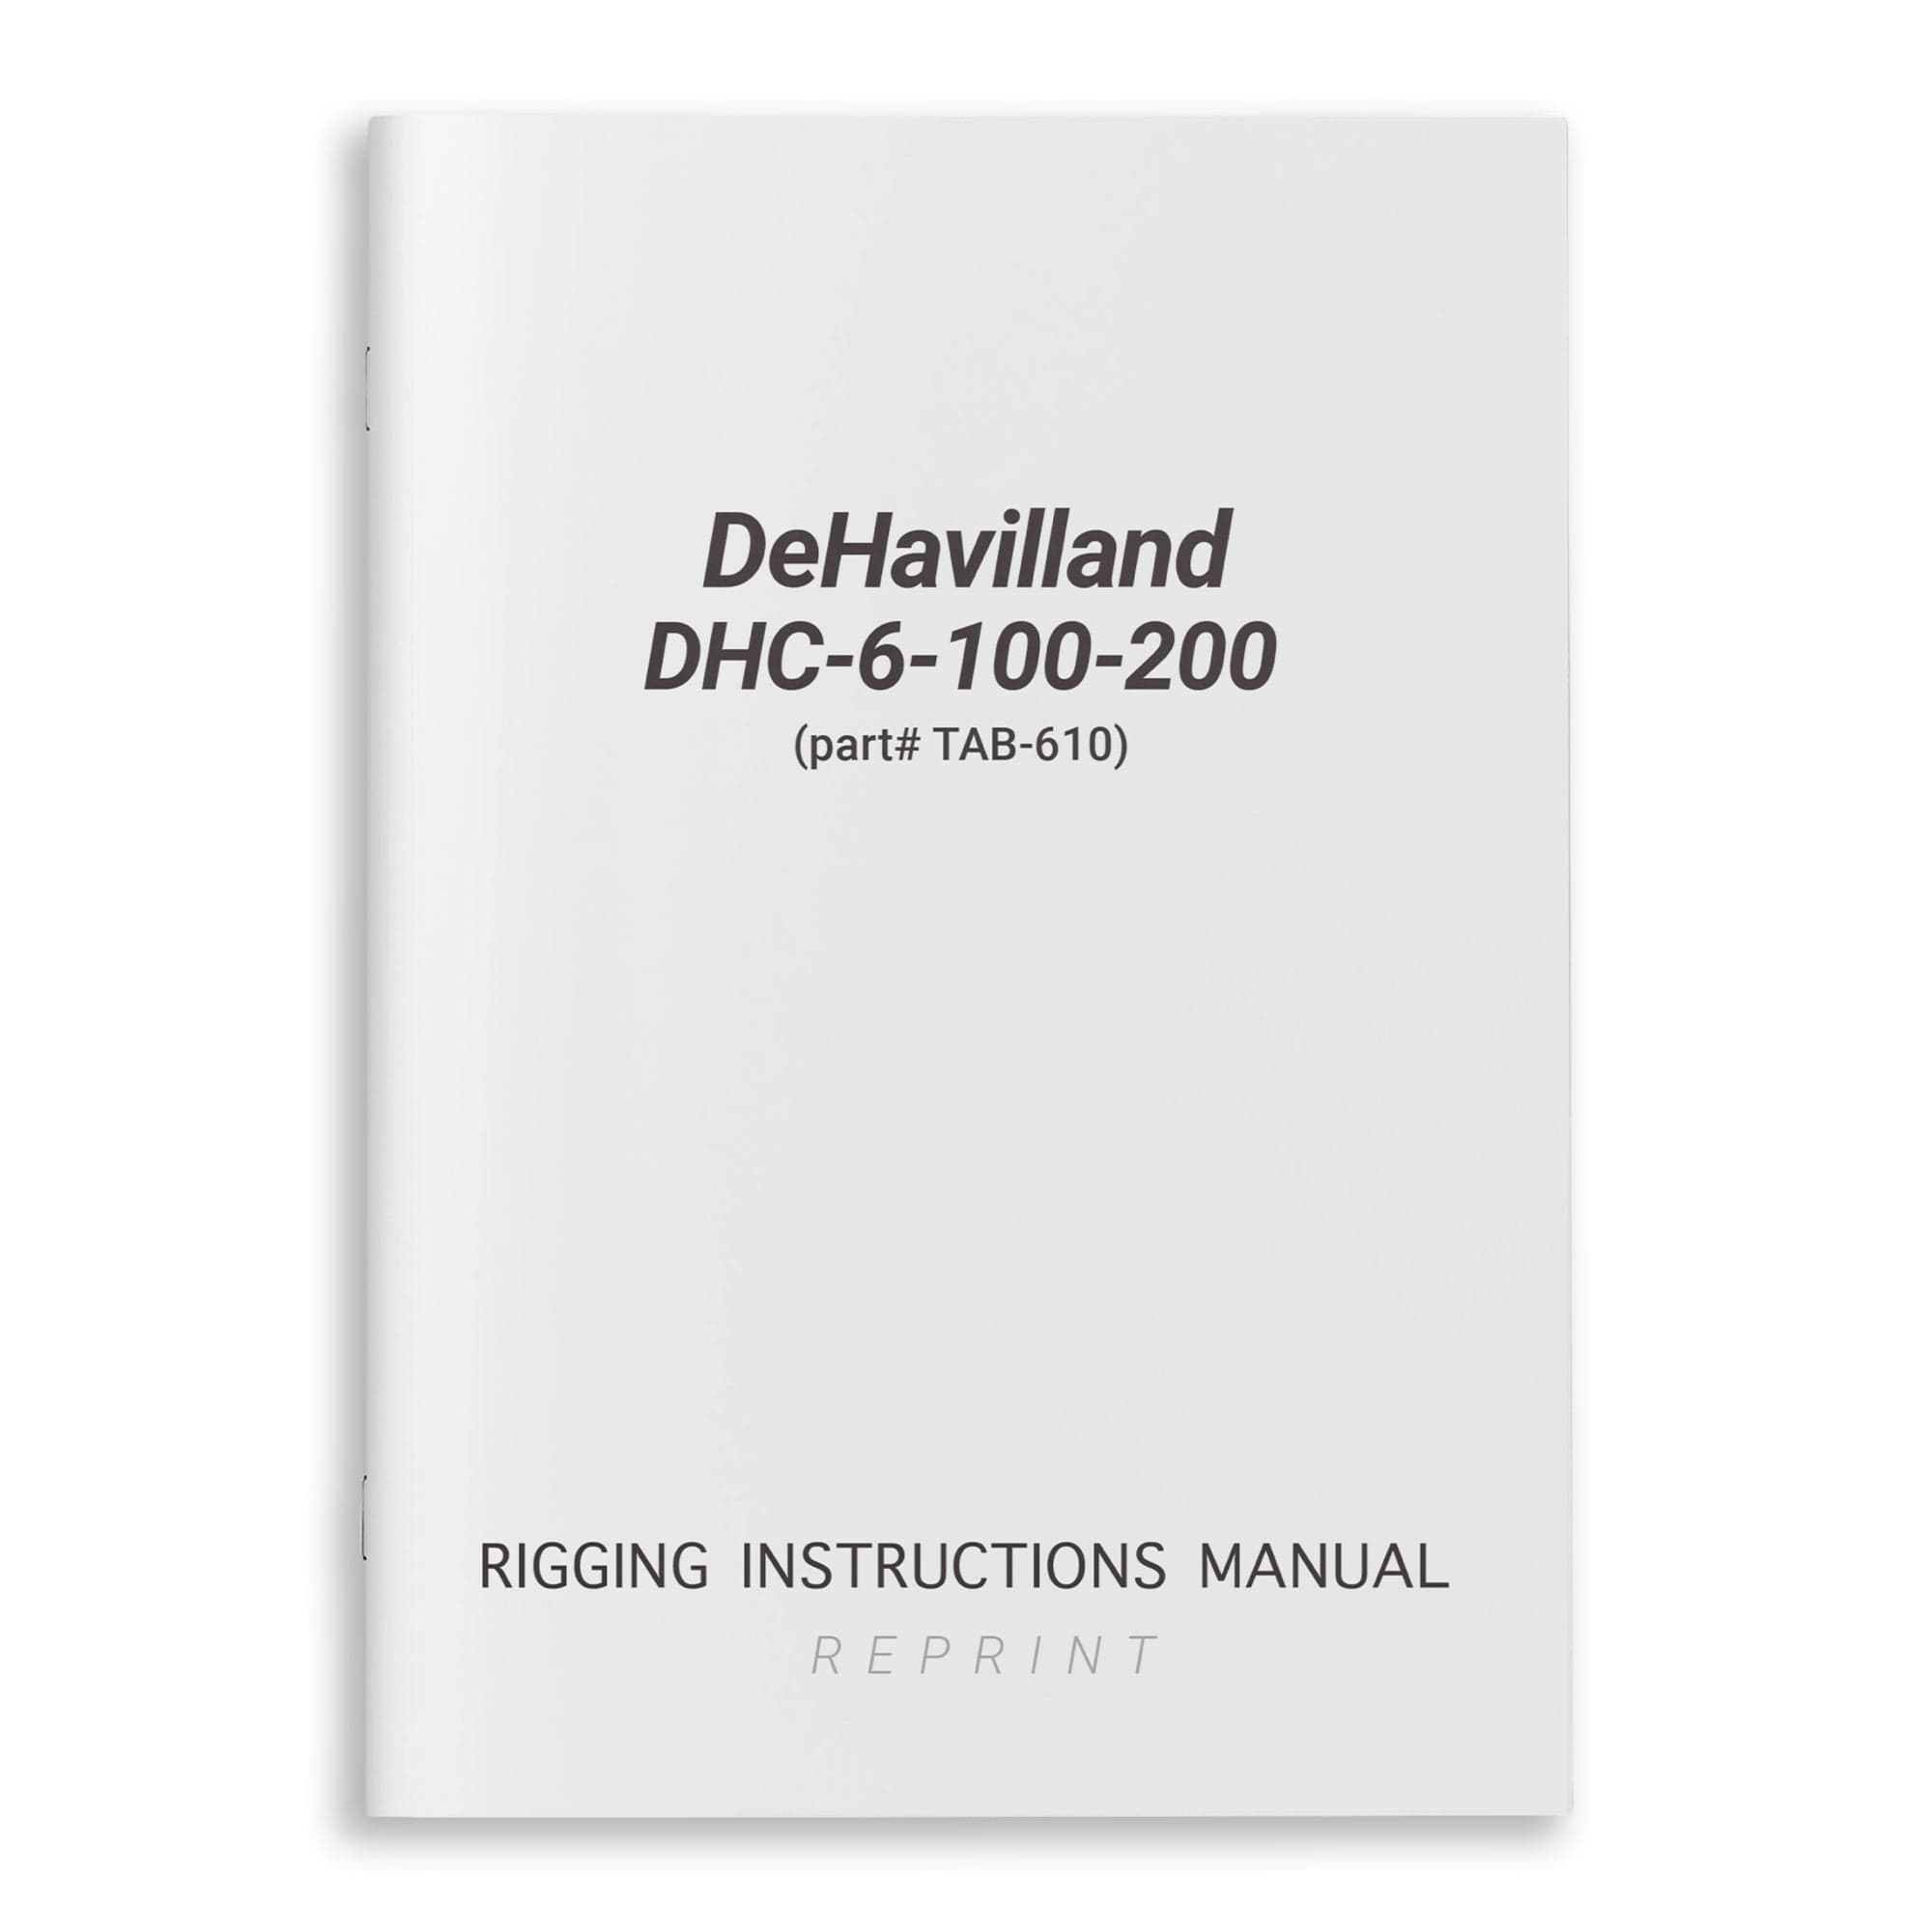 DeHavilland DHC-6-100-200 Rigging Instructions Manual (part# TAB-610)